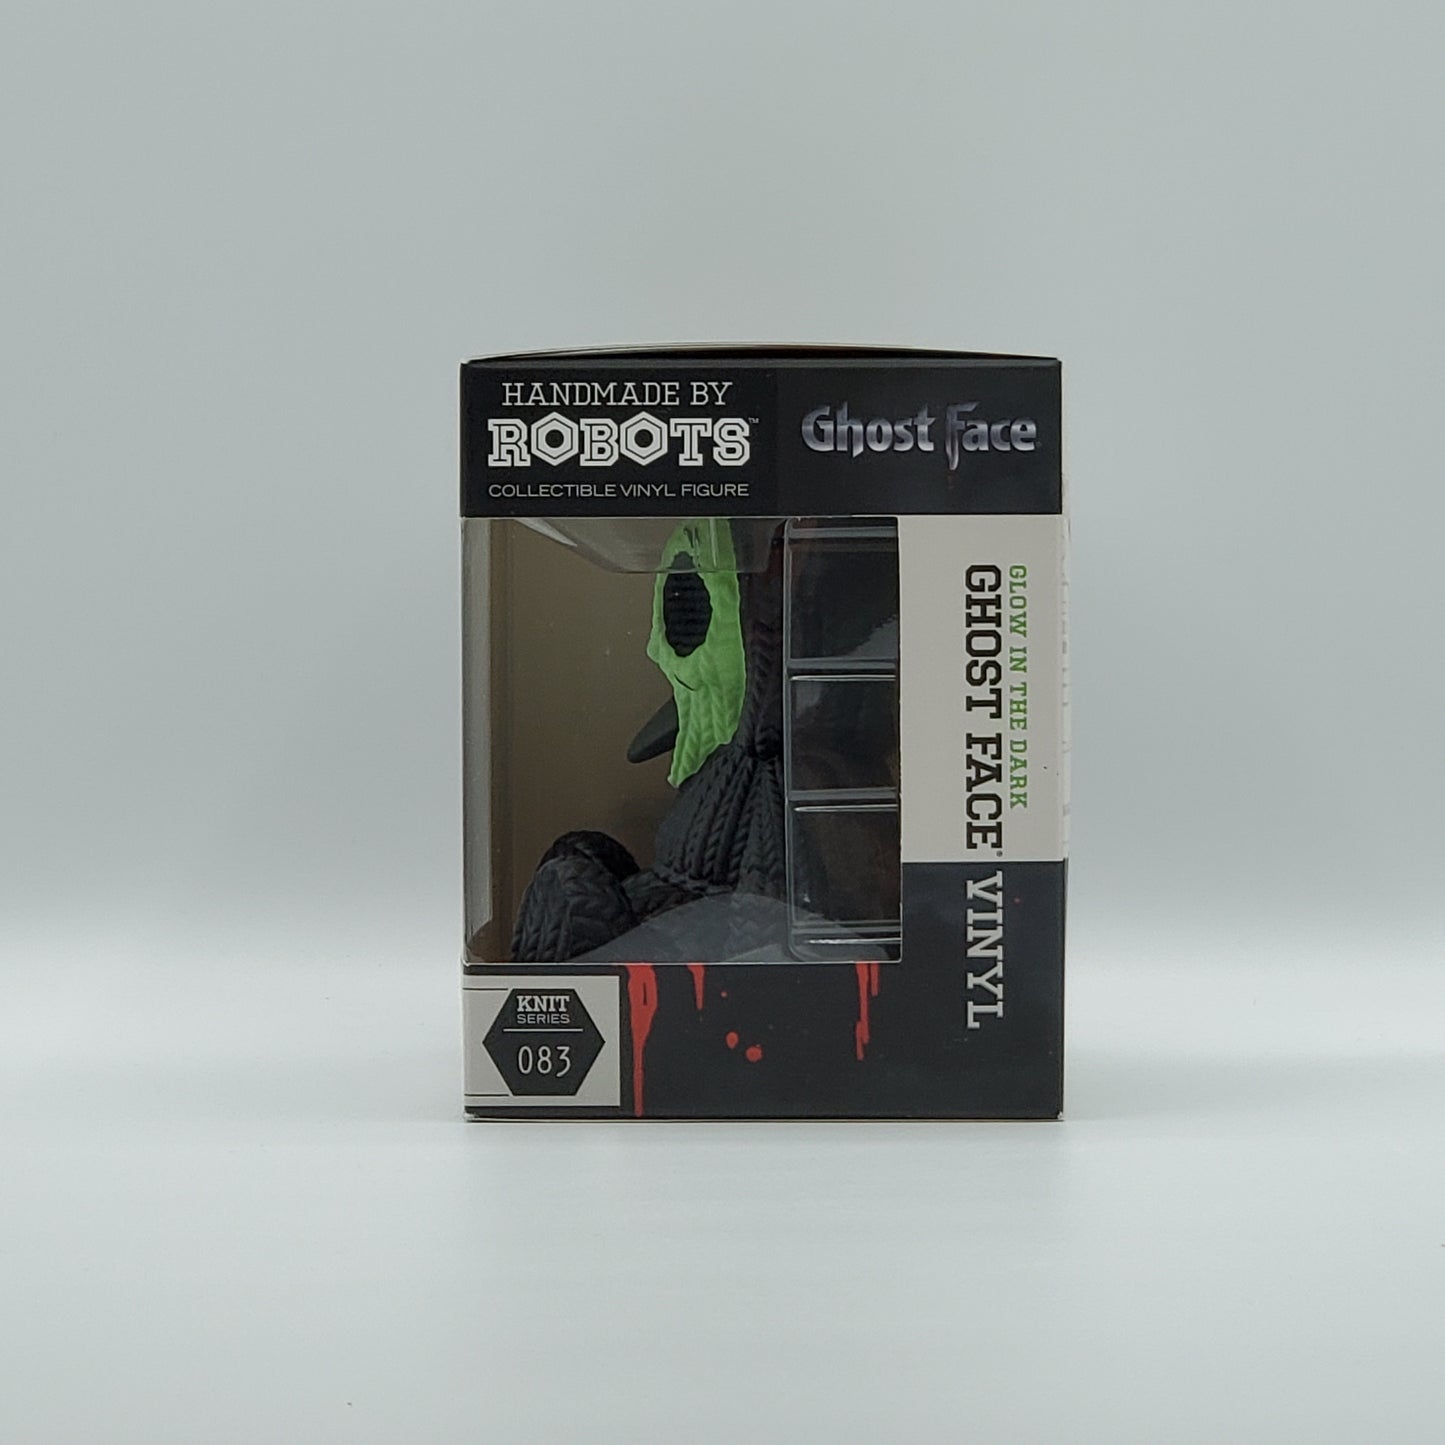 HANDMADE BY ROBOTS - GHOST FACE (GREEN) - GLOW IN THE DARK - GAMESTOP EXCLUSIVE